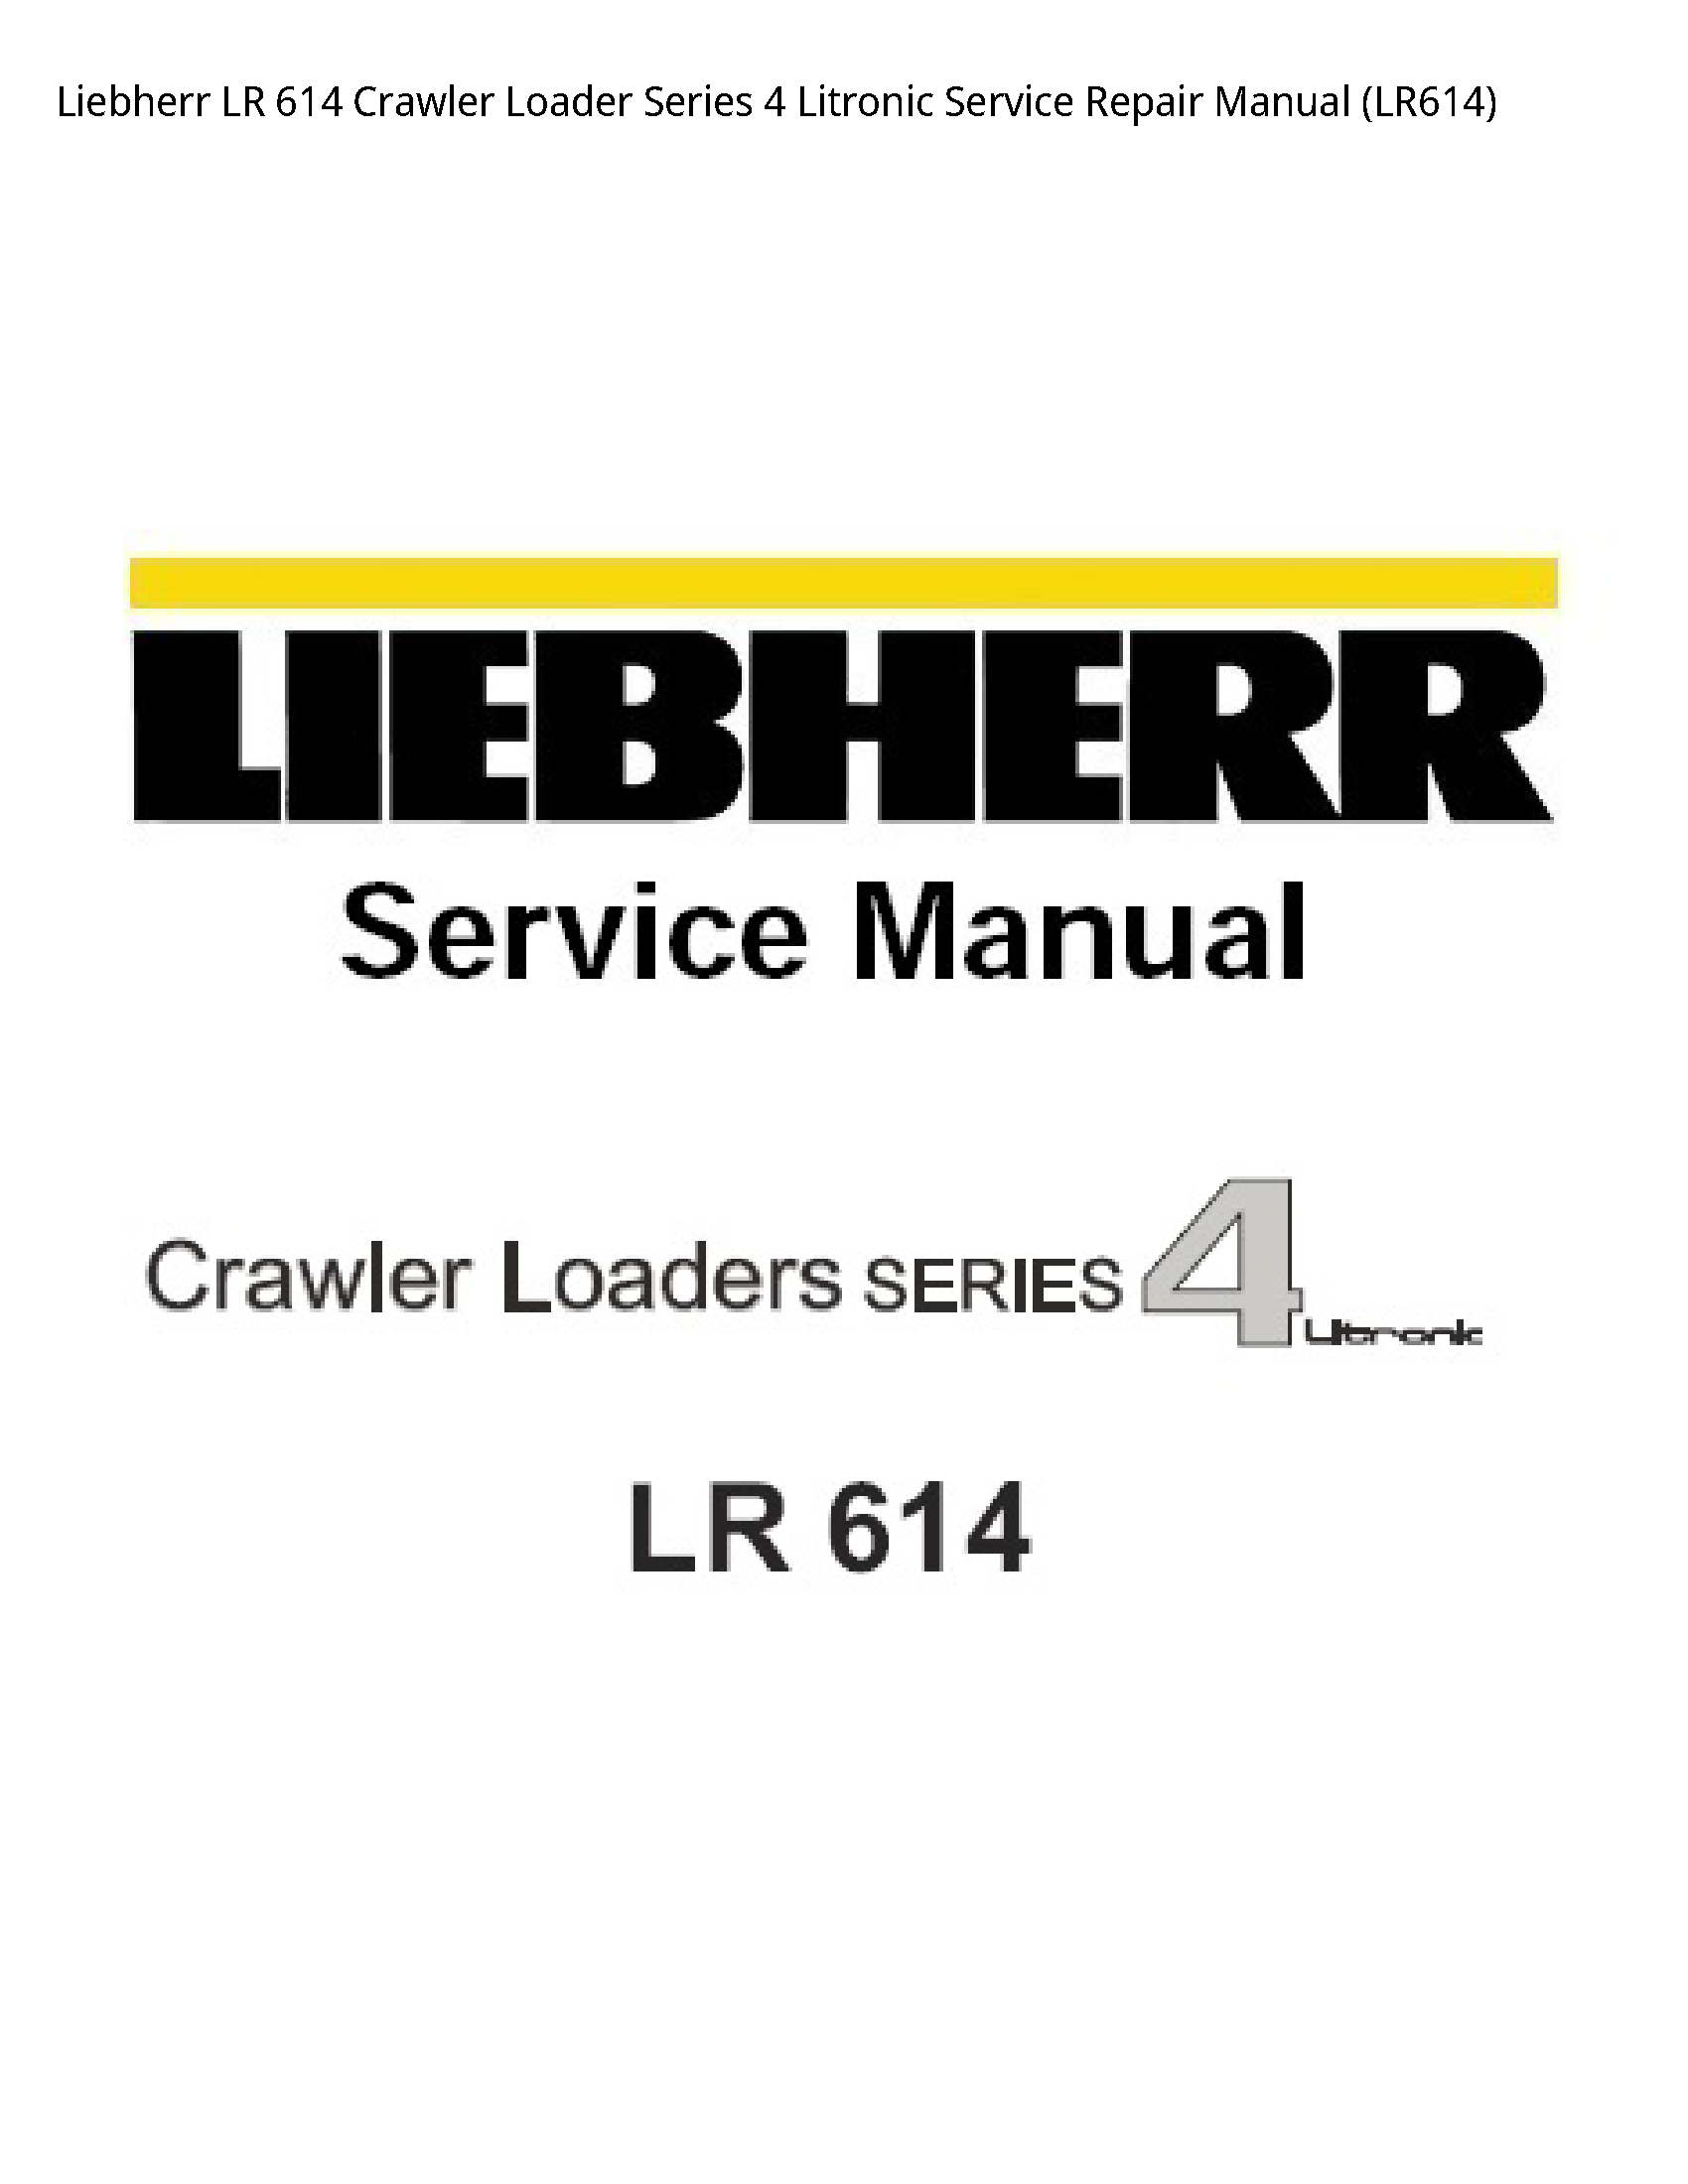 Liebherr 614 LR Crawler Loader Series Litronic manual